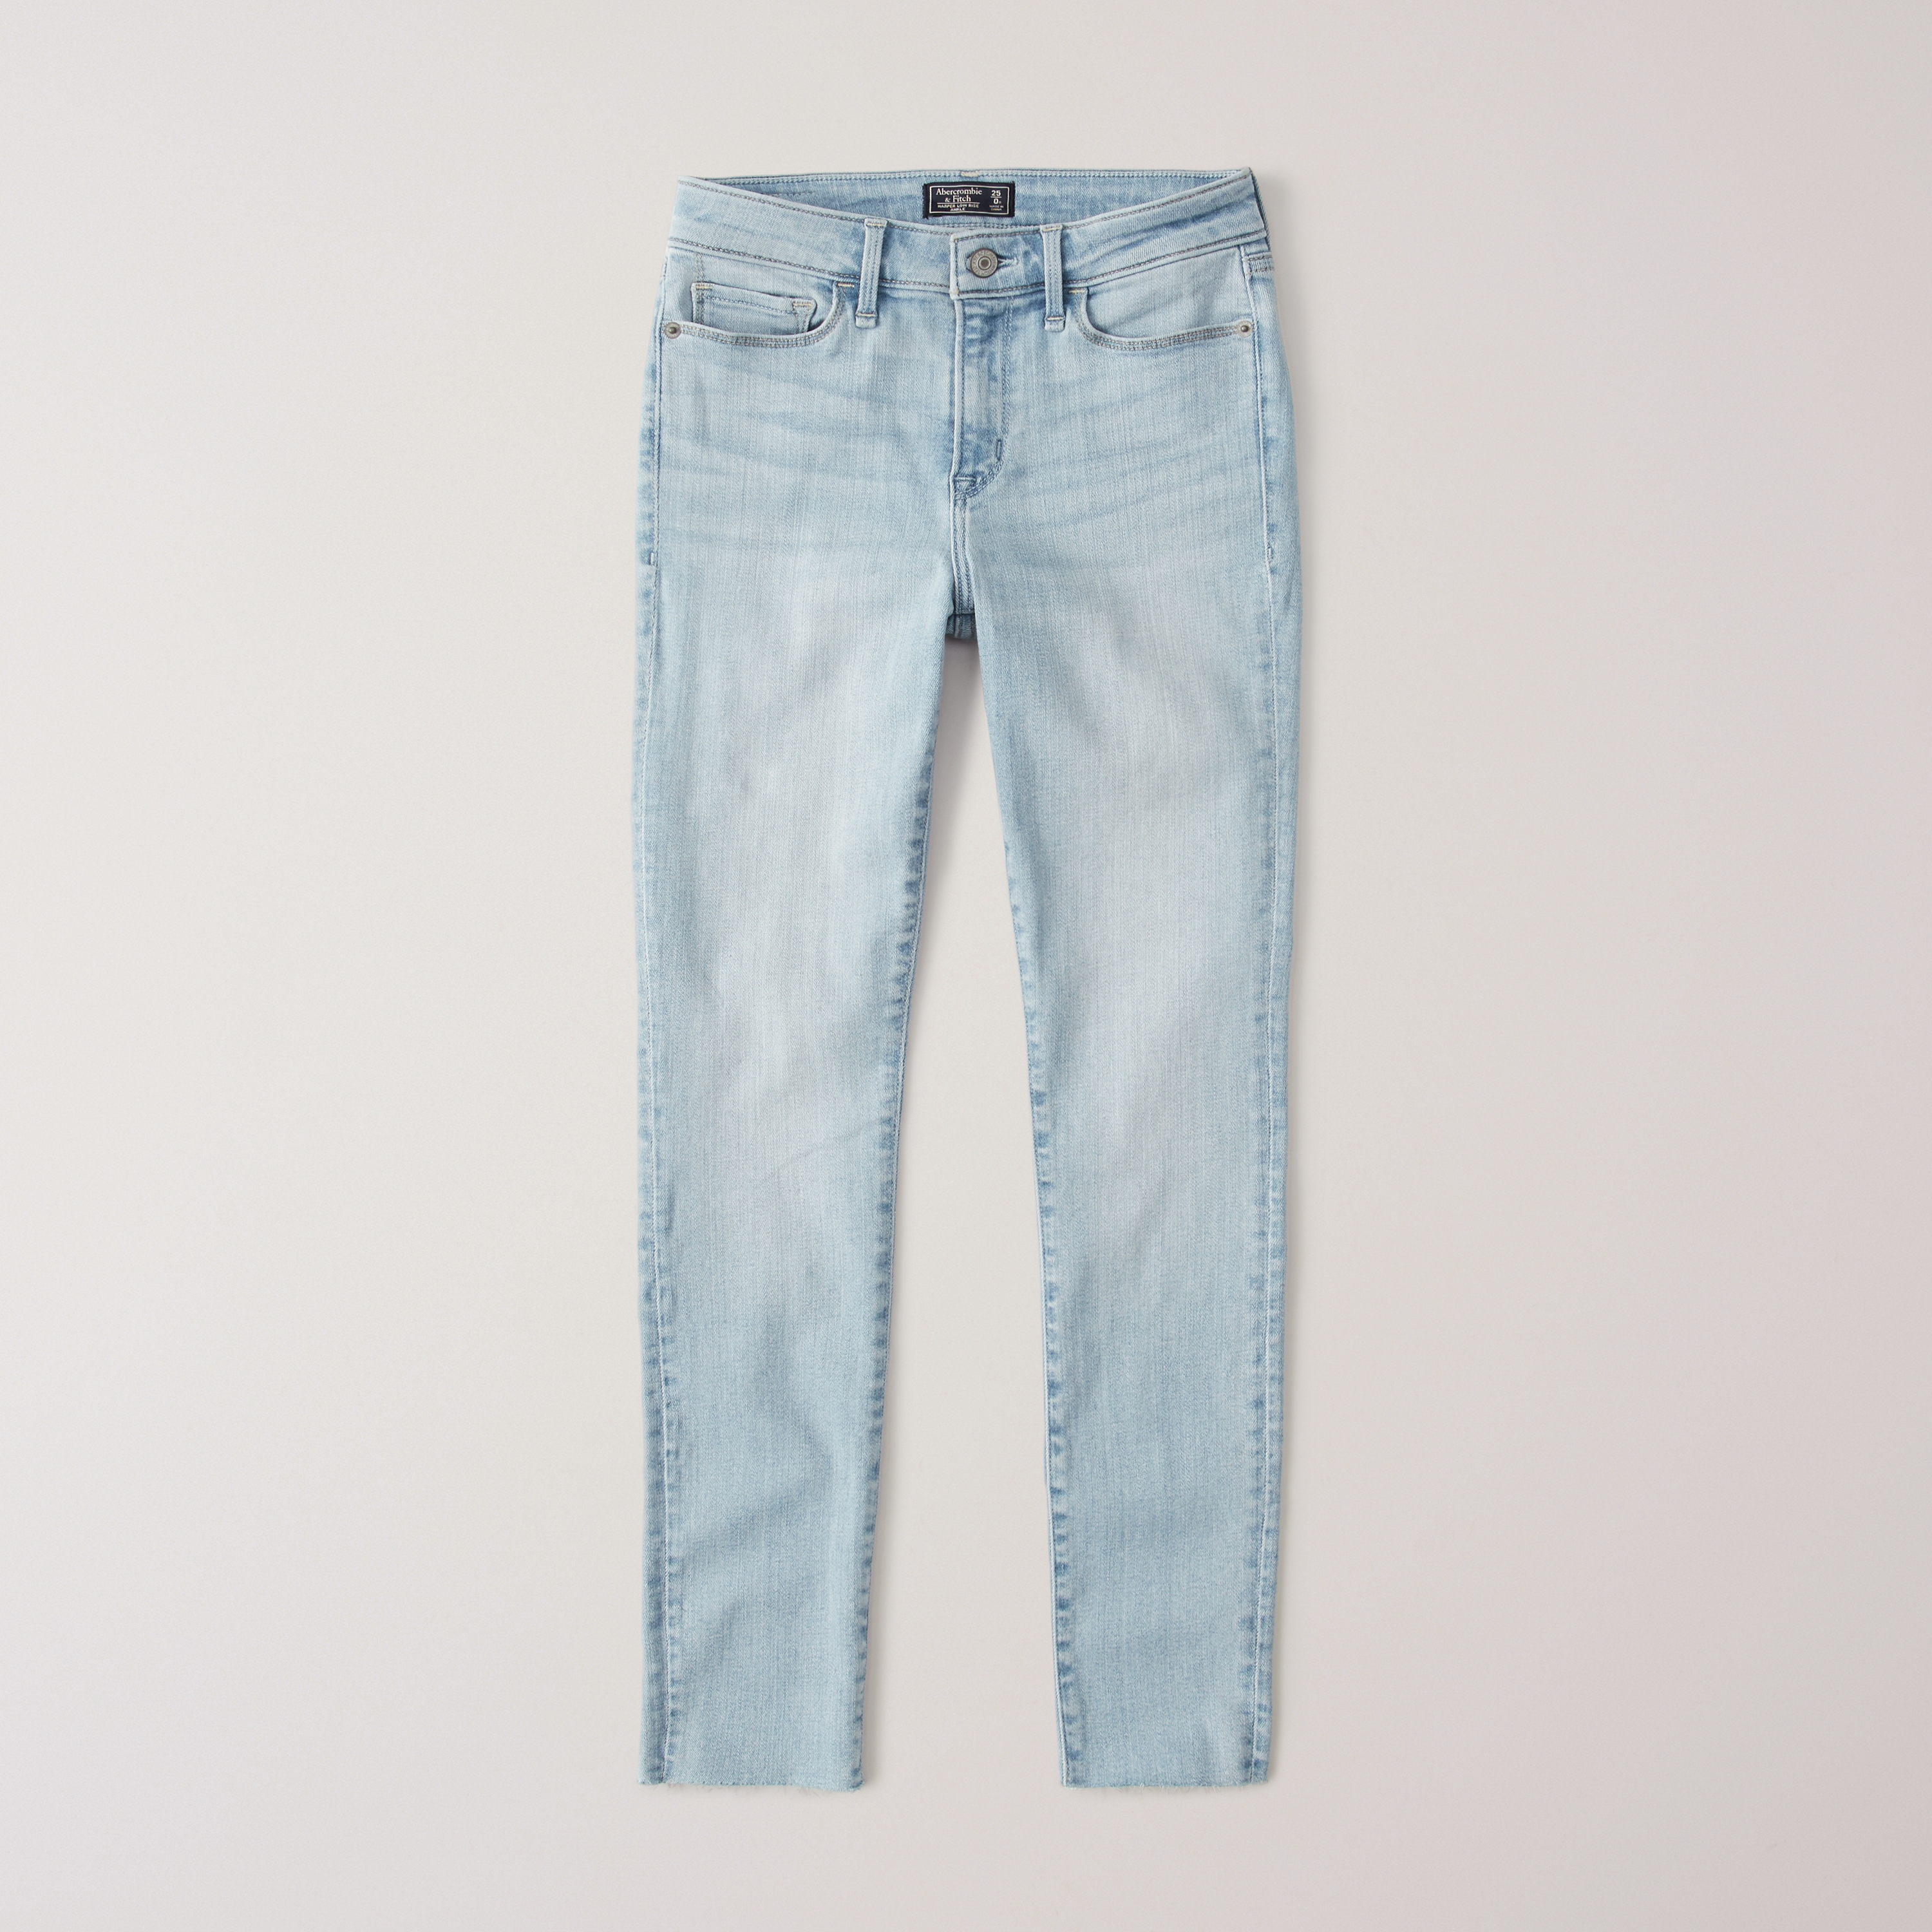 harper ankle jeans abercrombie